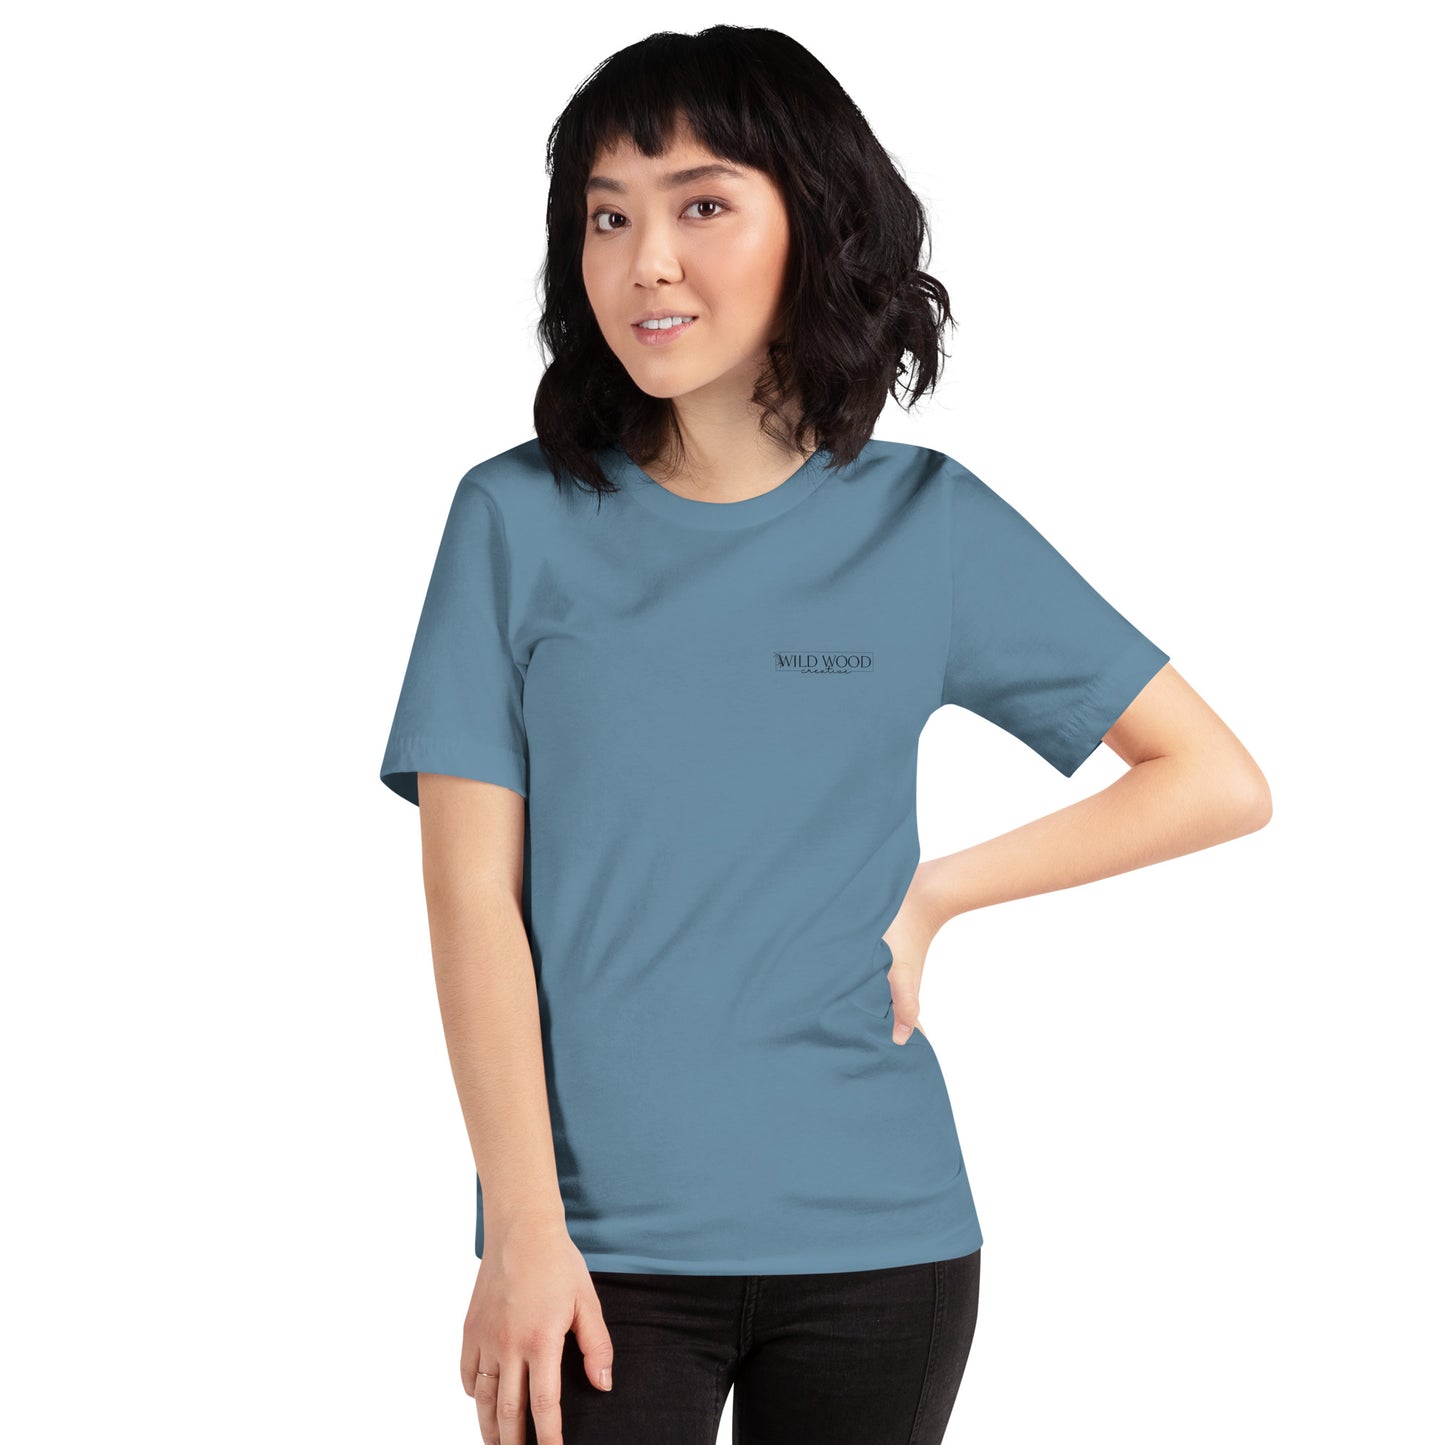 Voyageur - Skaoi - Unisex T-shirt